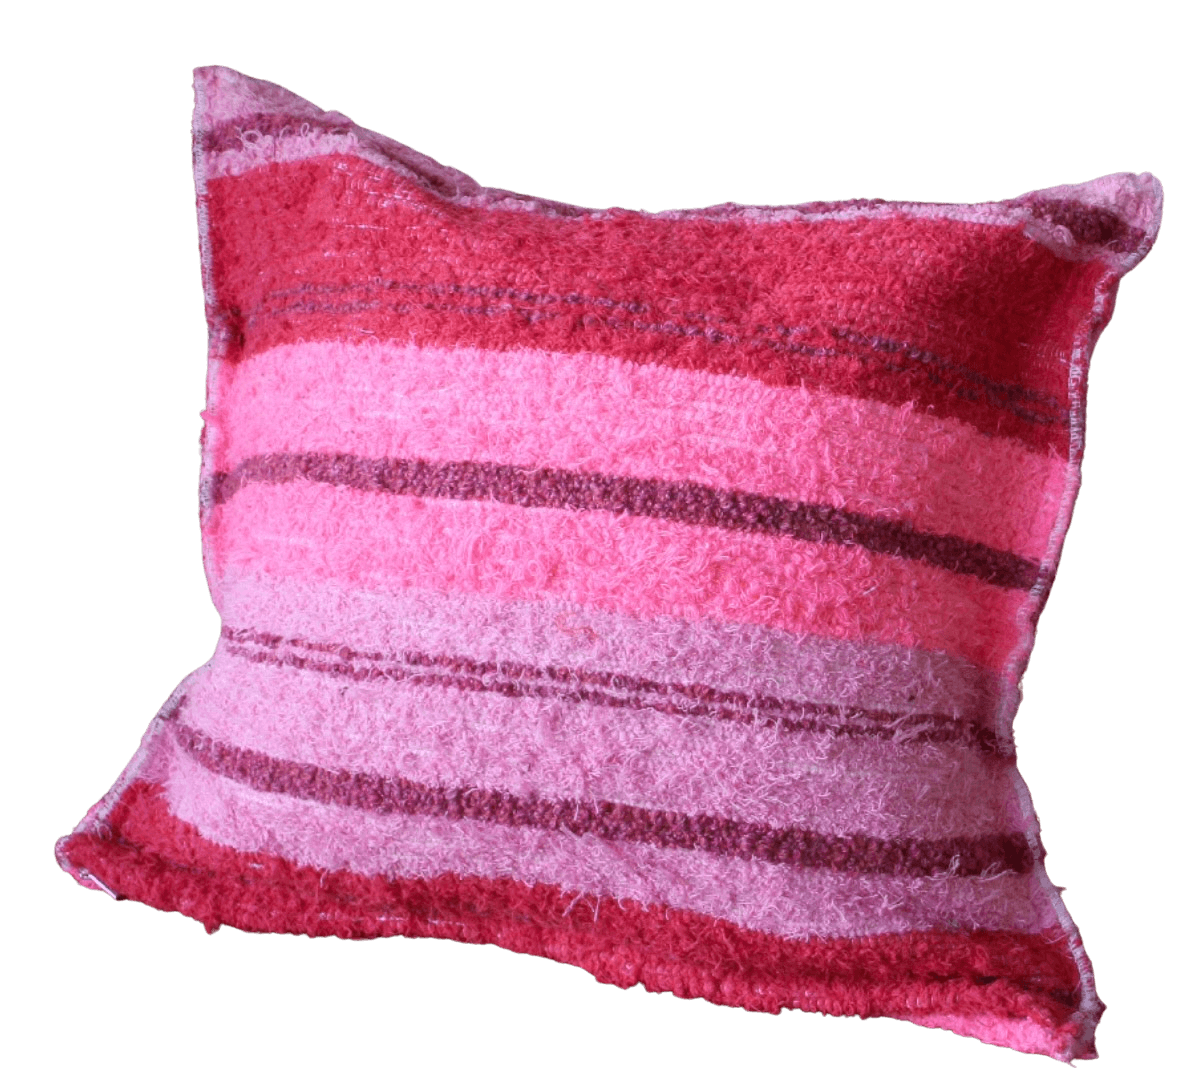 Amour Sud Marbella handgewebtes Kissen inklusive Füllung in pink & rose - 50 x 50 cm - Bitangel RENOVATE & FURNISH HOMES GmbH